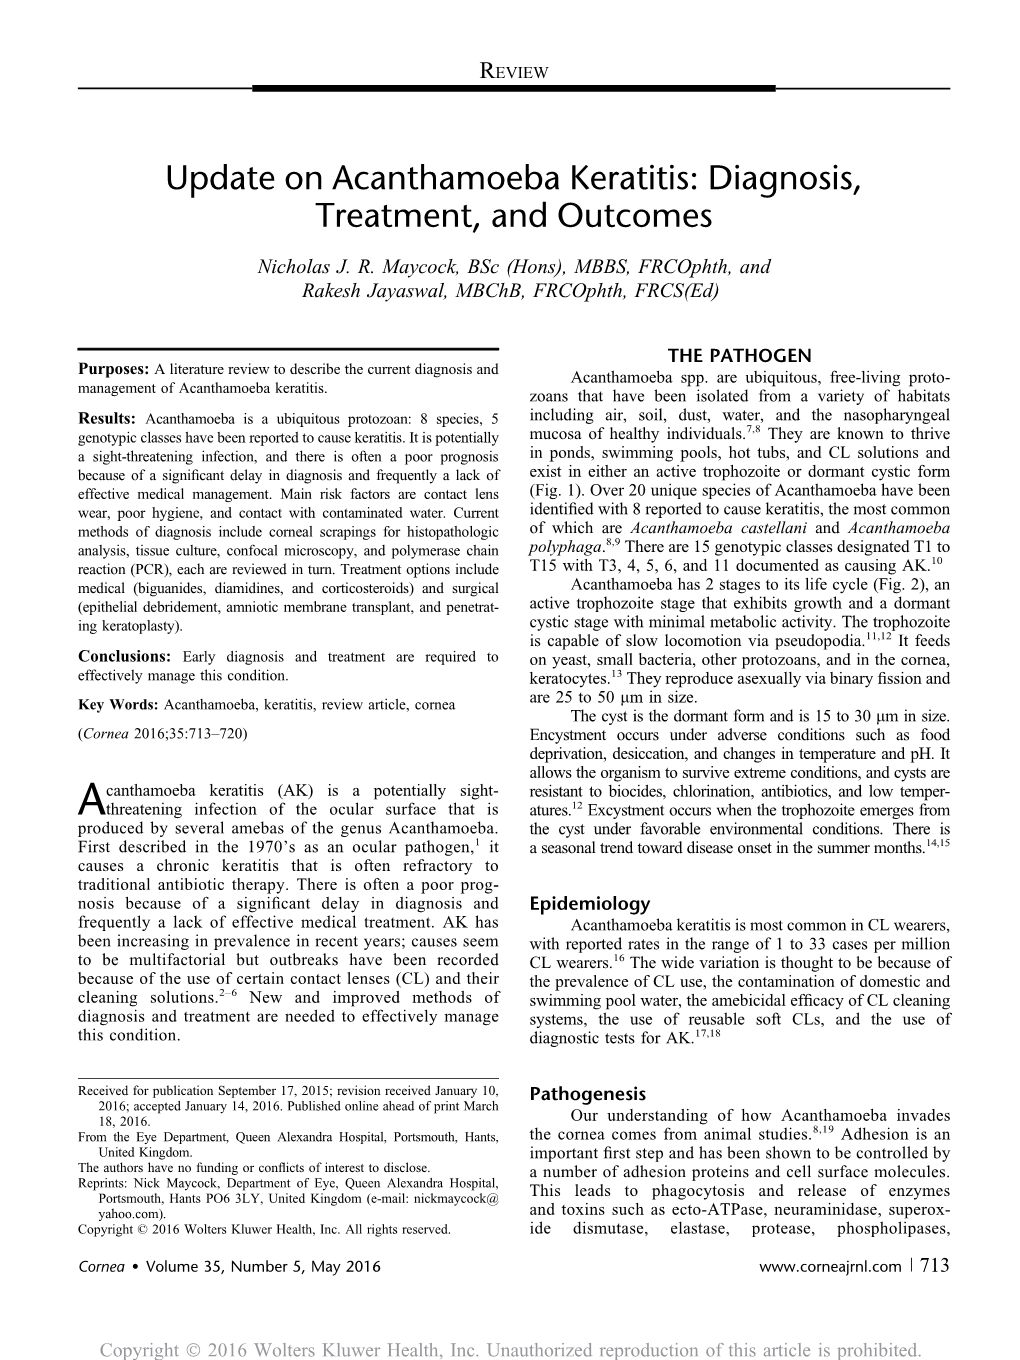 Update on Acanthamoeba Keratitis: Diagnosis, Treatment, and Outcomes